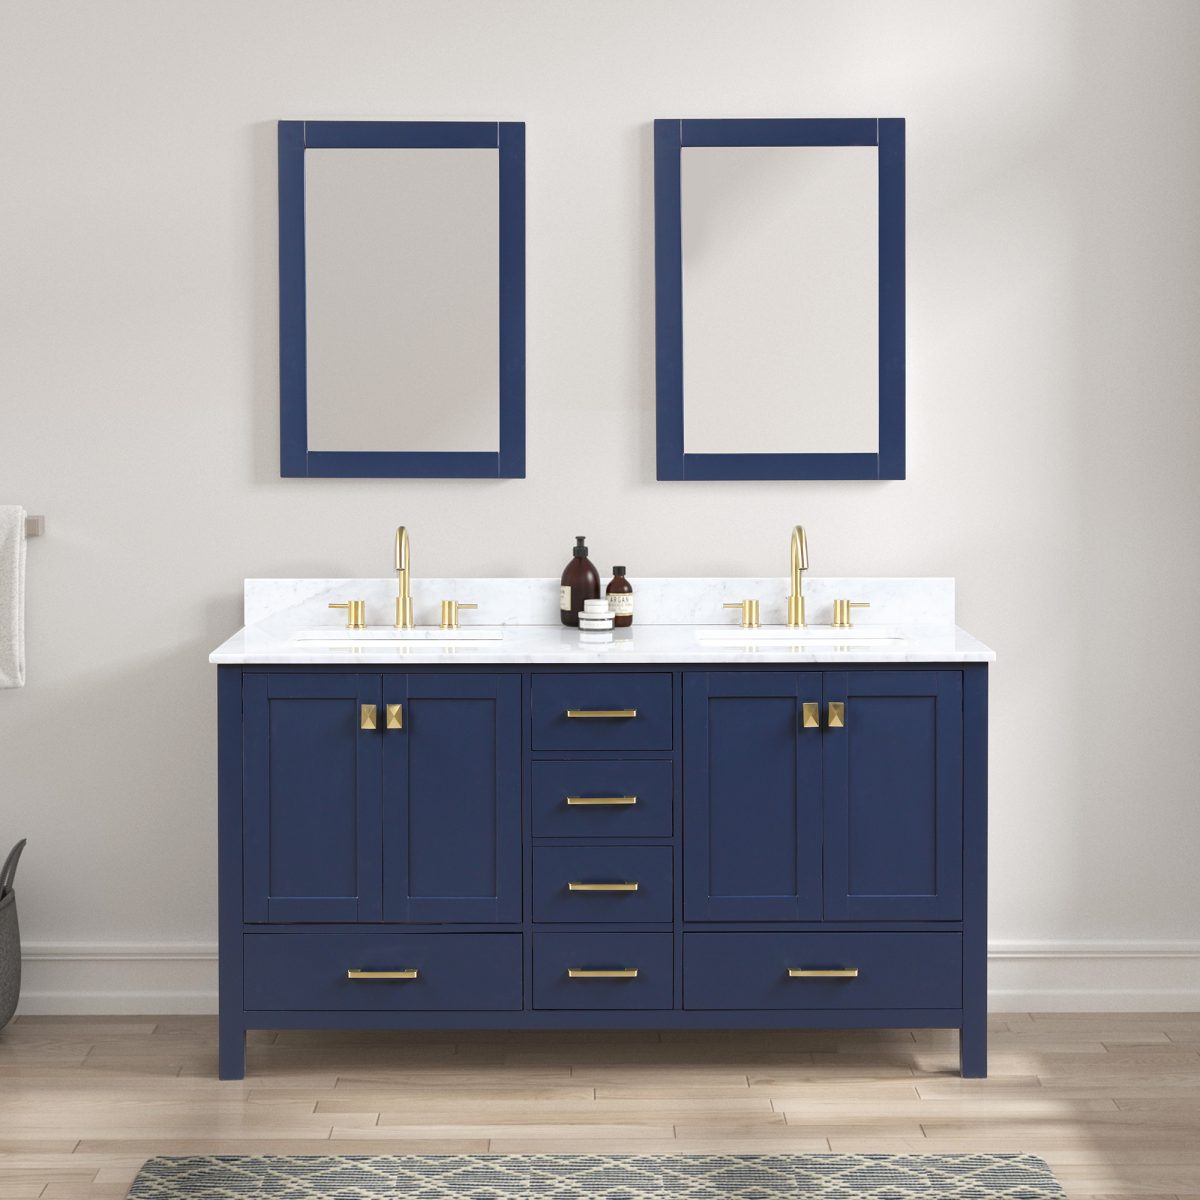 Blossom brand blue double sink bathroom vanities